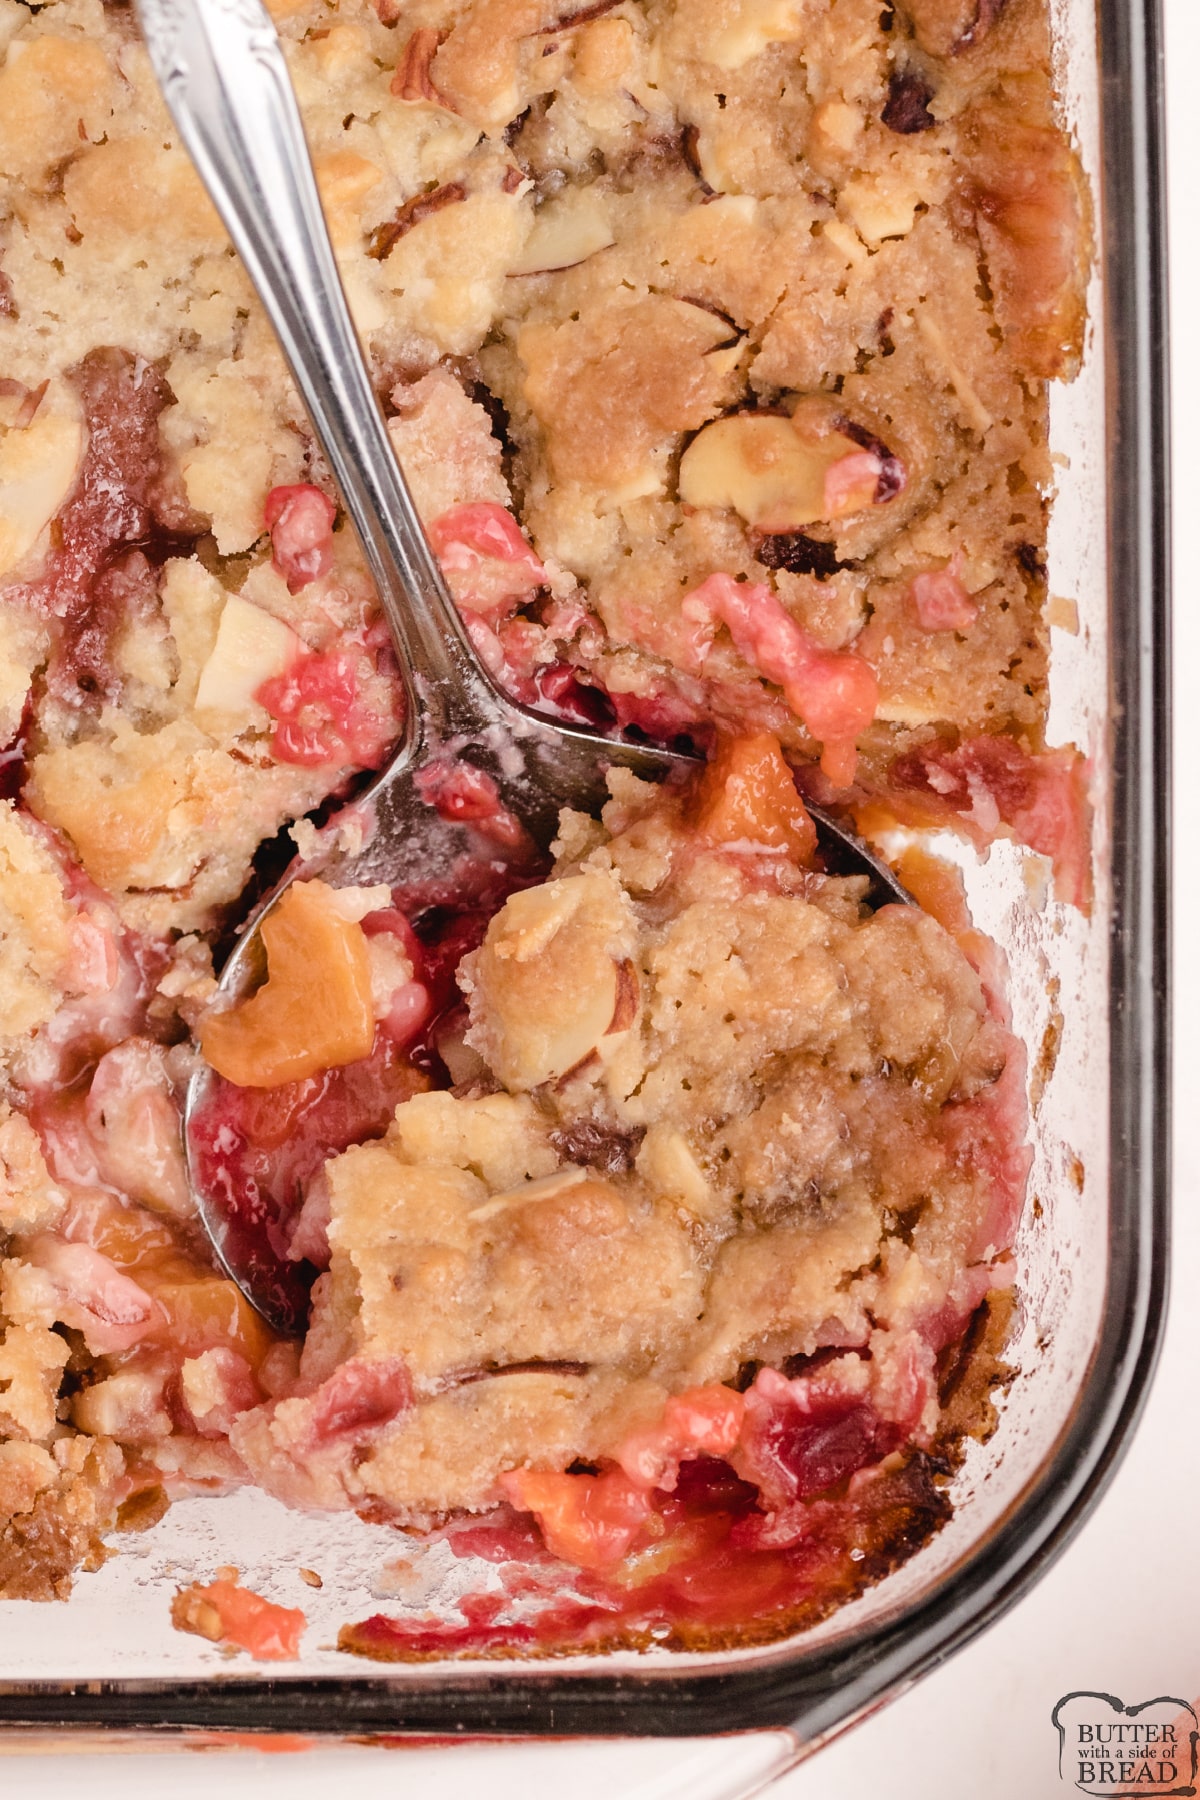 Homemade crumble recipe with peaches and raspberries